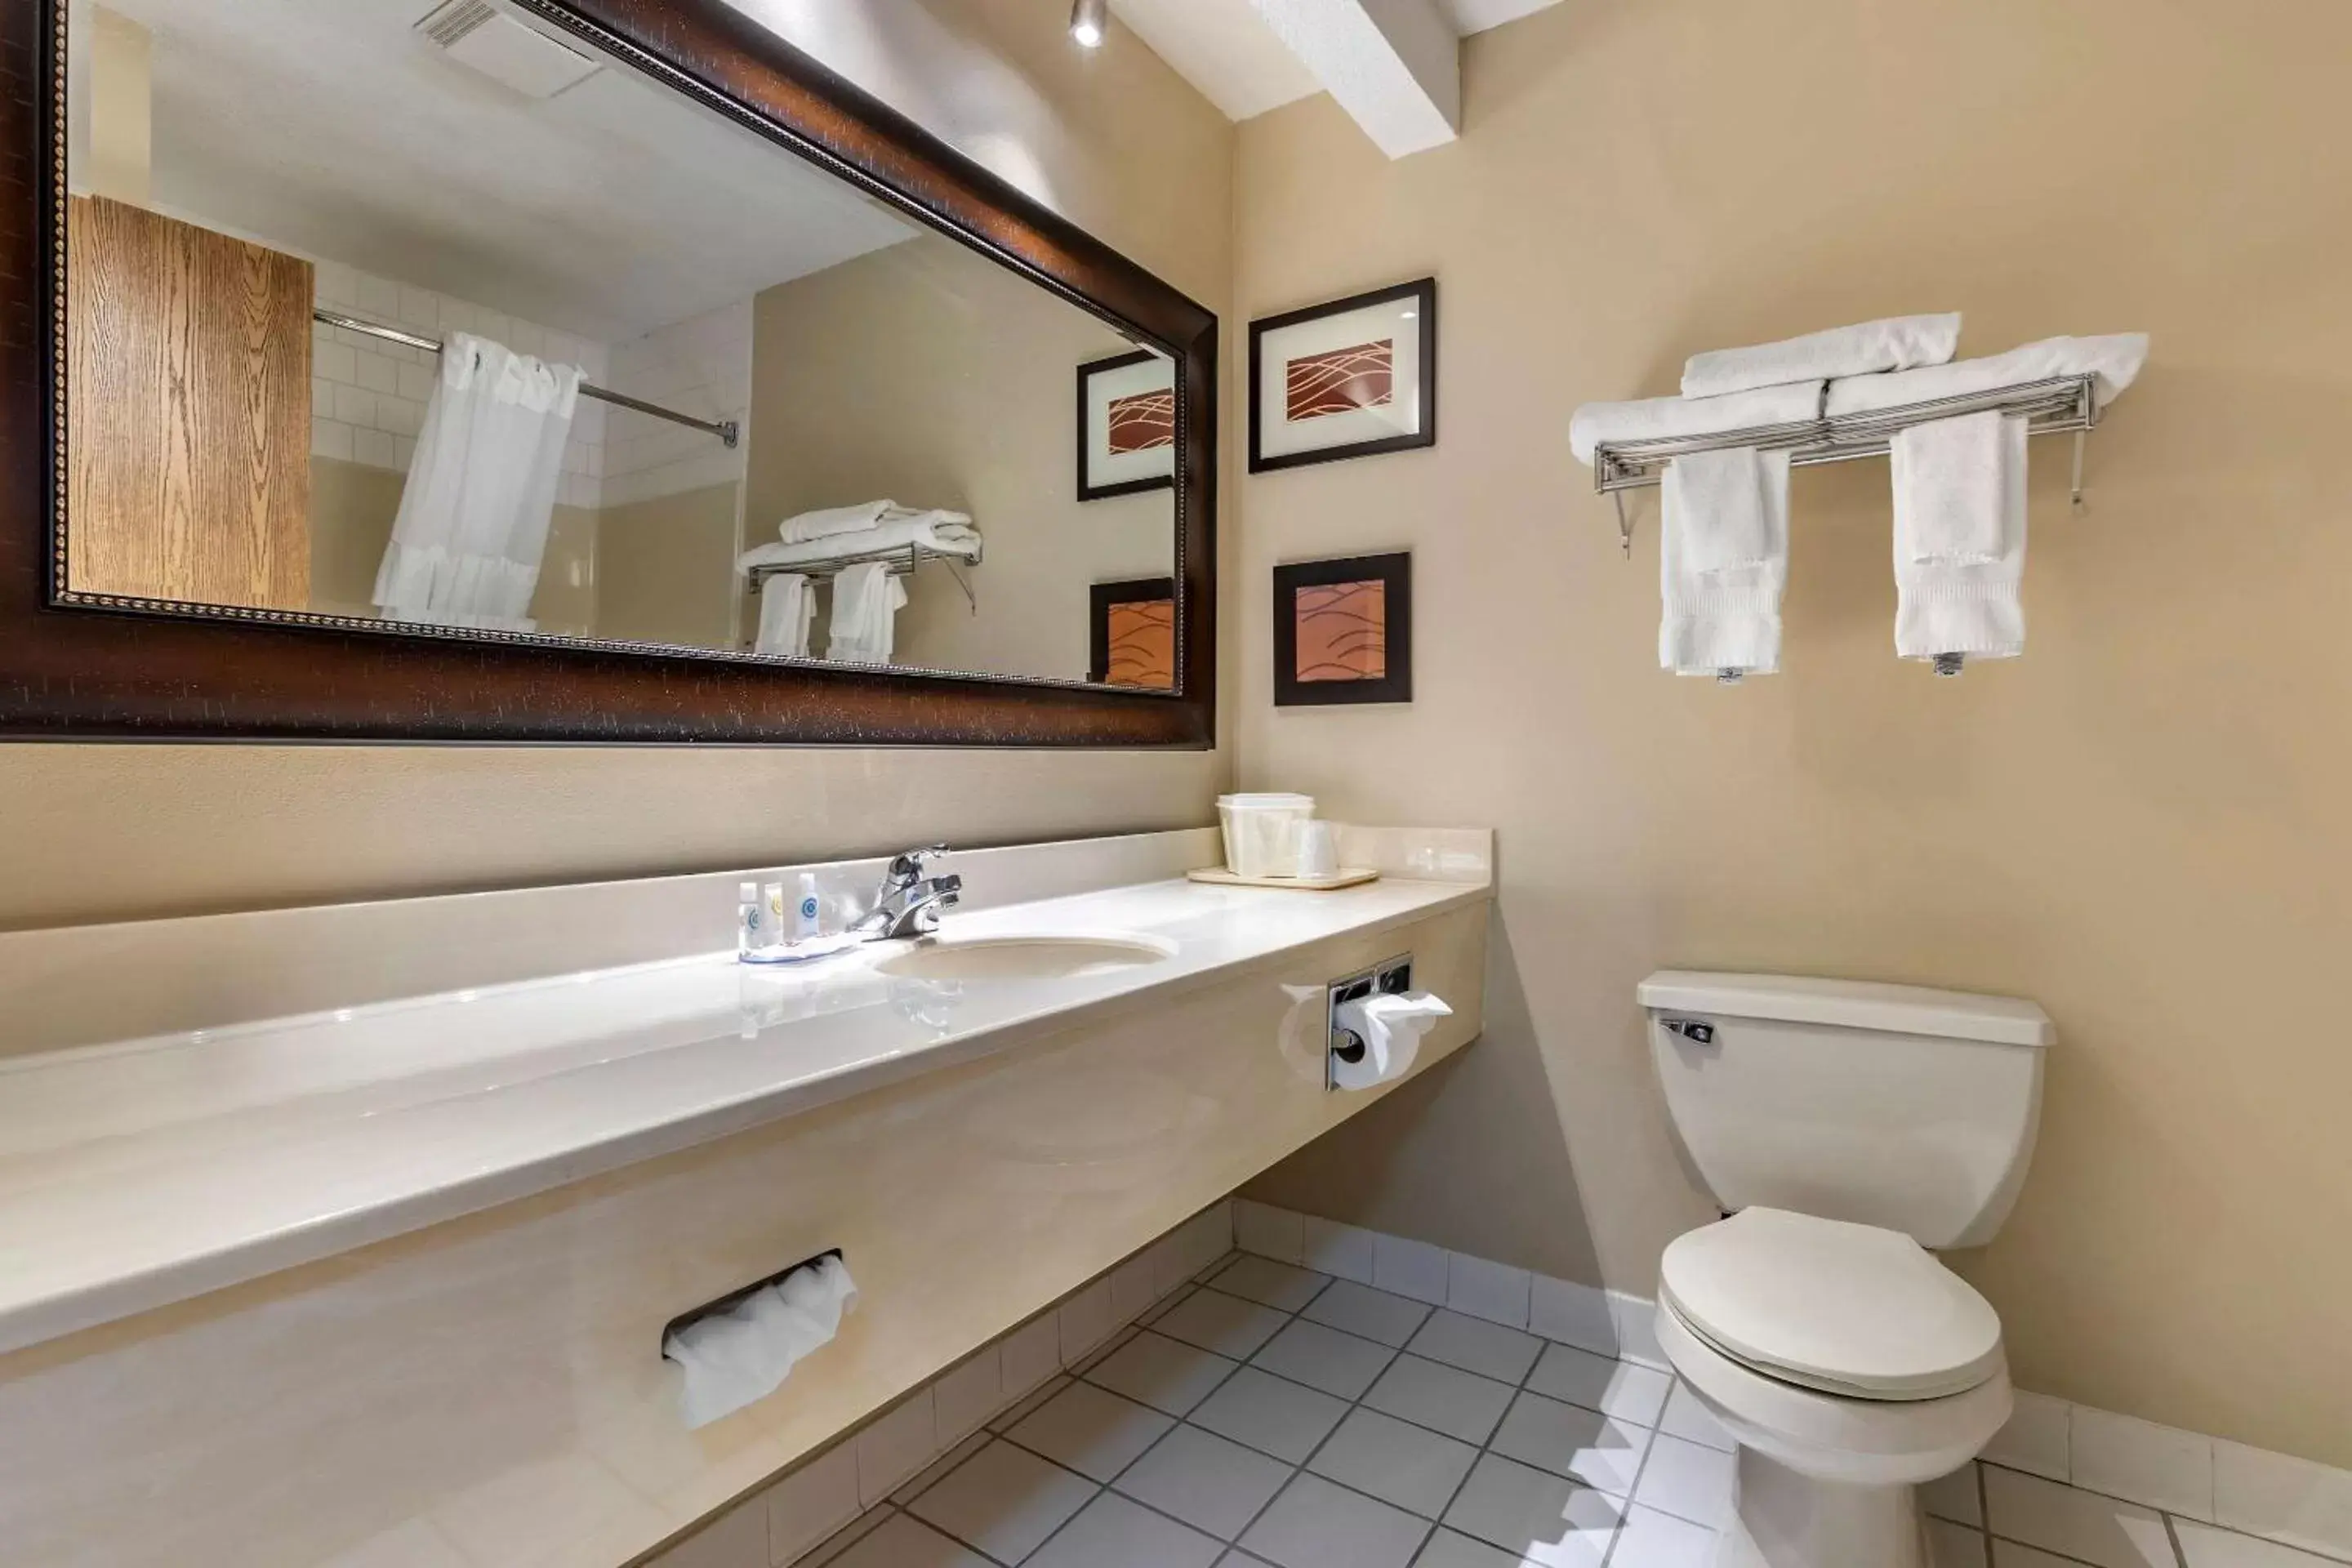 Bathroom in Comfort Inn Muscatine near Hwy 61